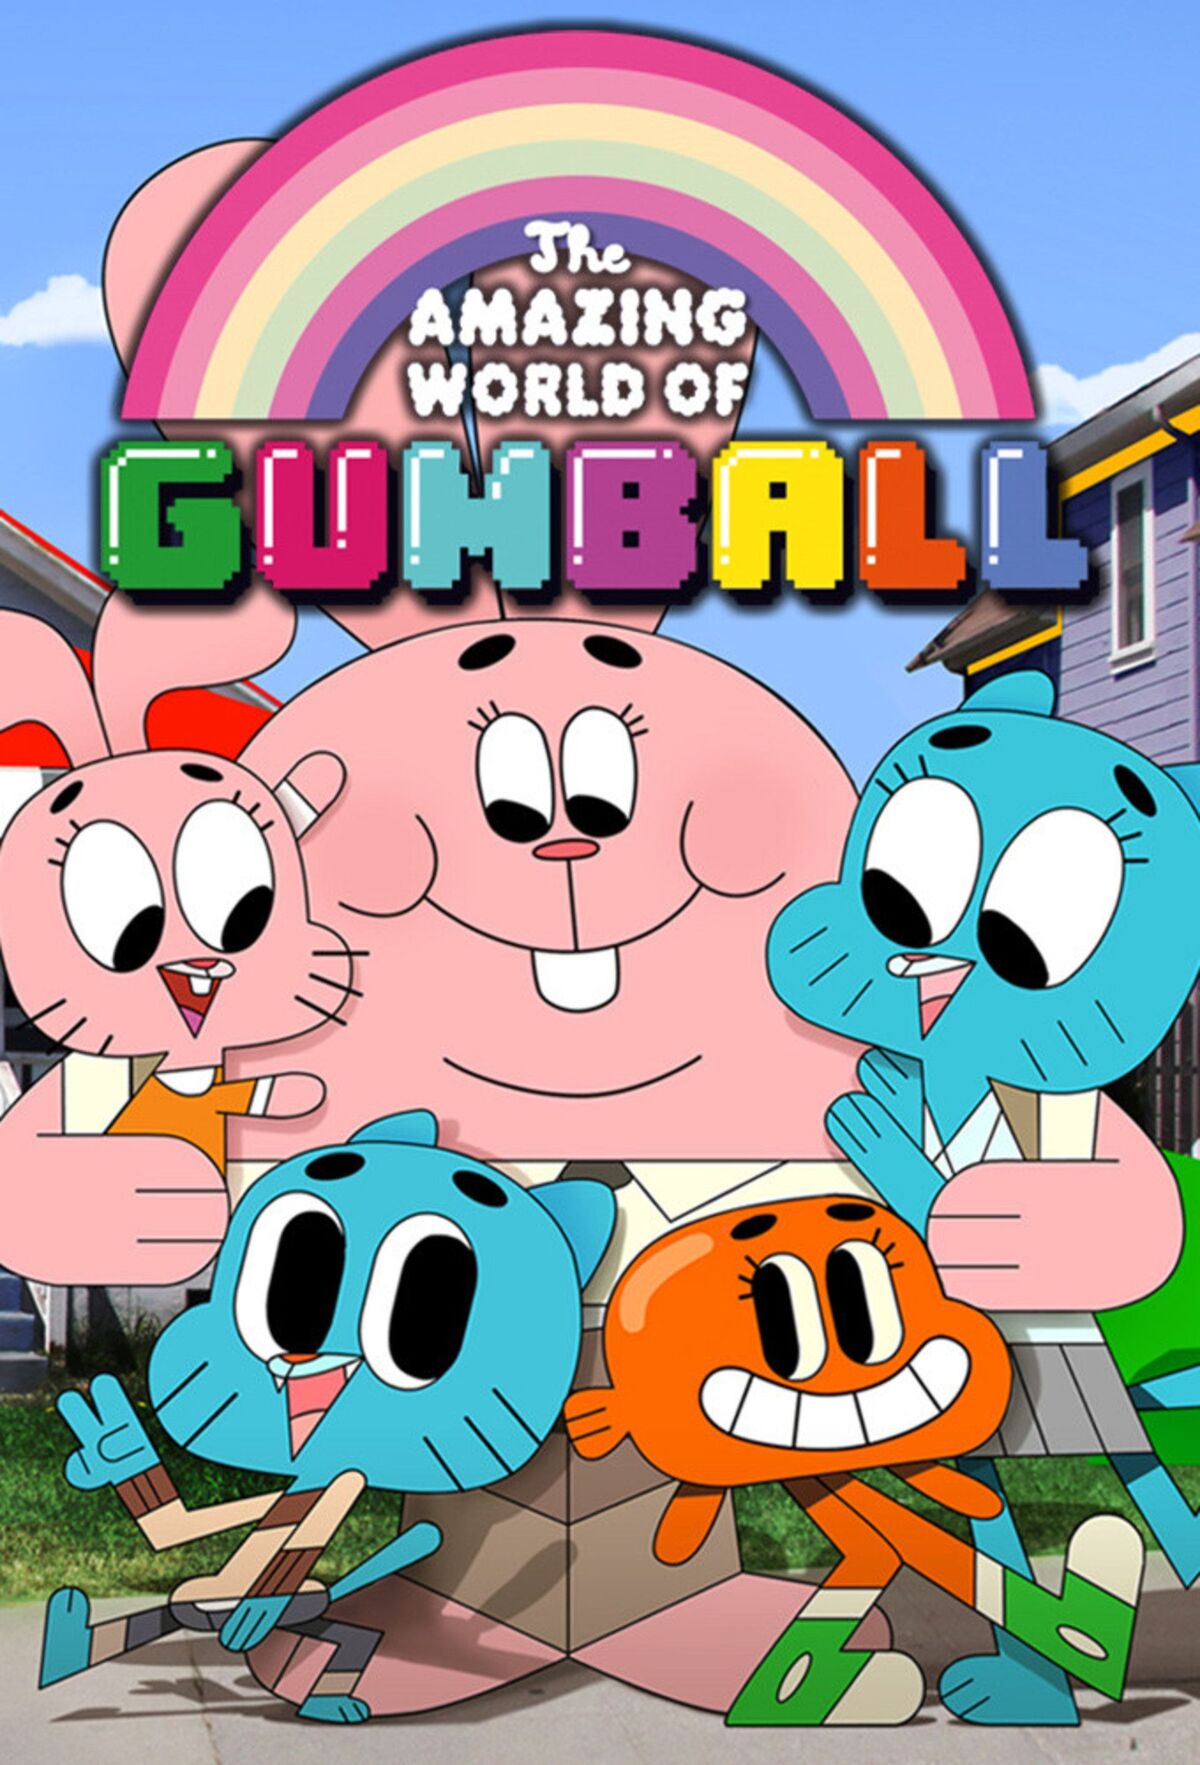 The Amazing World of Gumball The Bus (TV Episode 2016) - IMDb